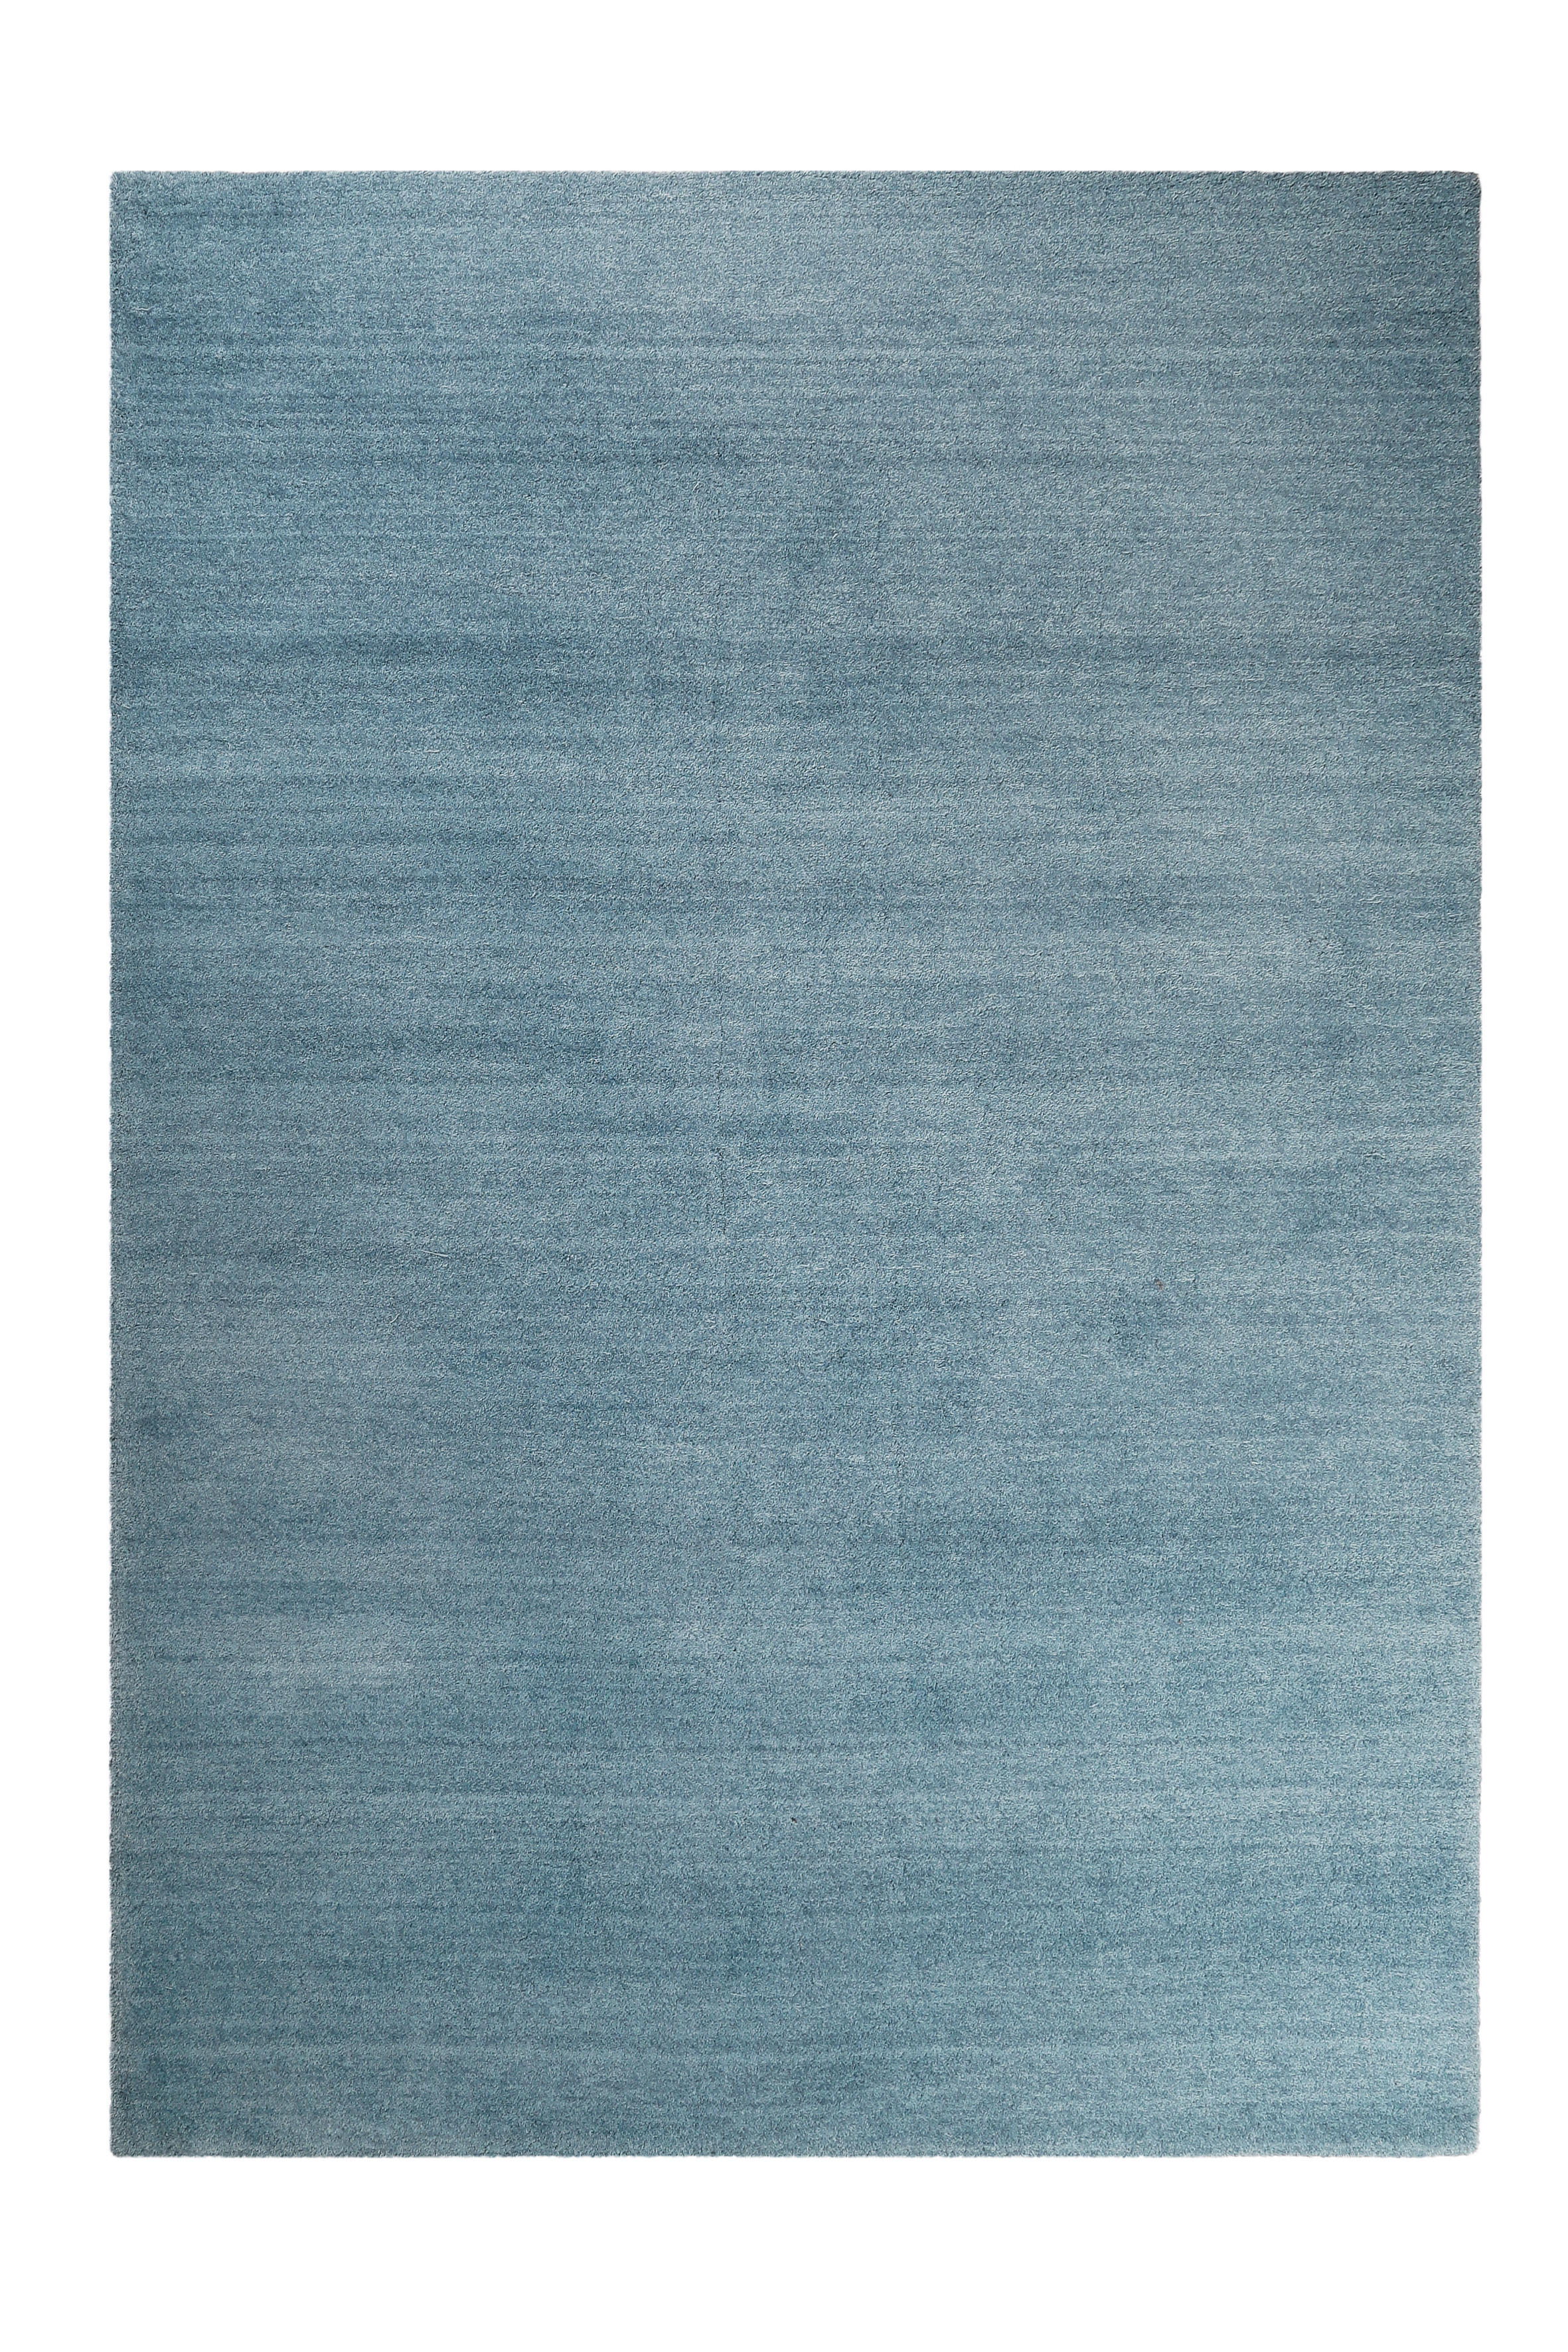 KOBEREC S VYSOKÝM VLASEM, 160/230 cm, modrá - modrá, Basics, textil (160/230cm) - Esprit